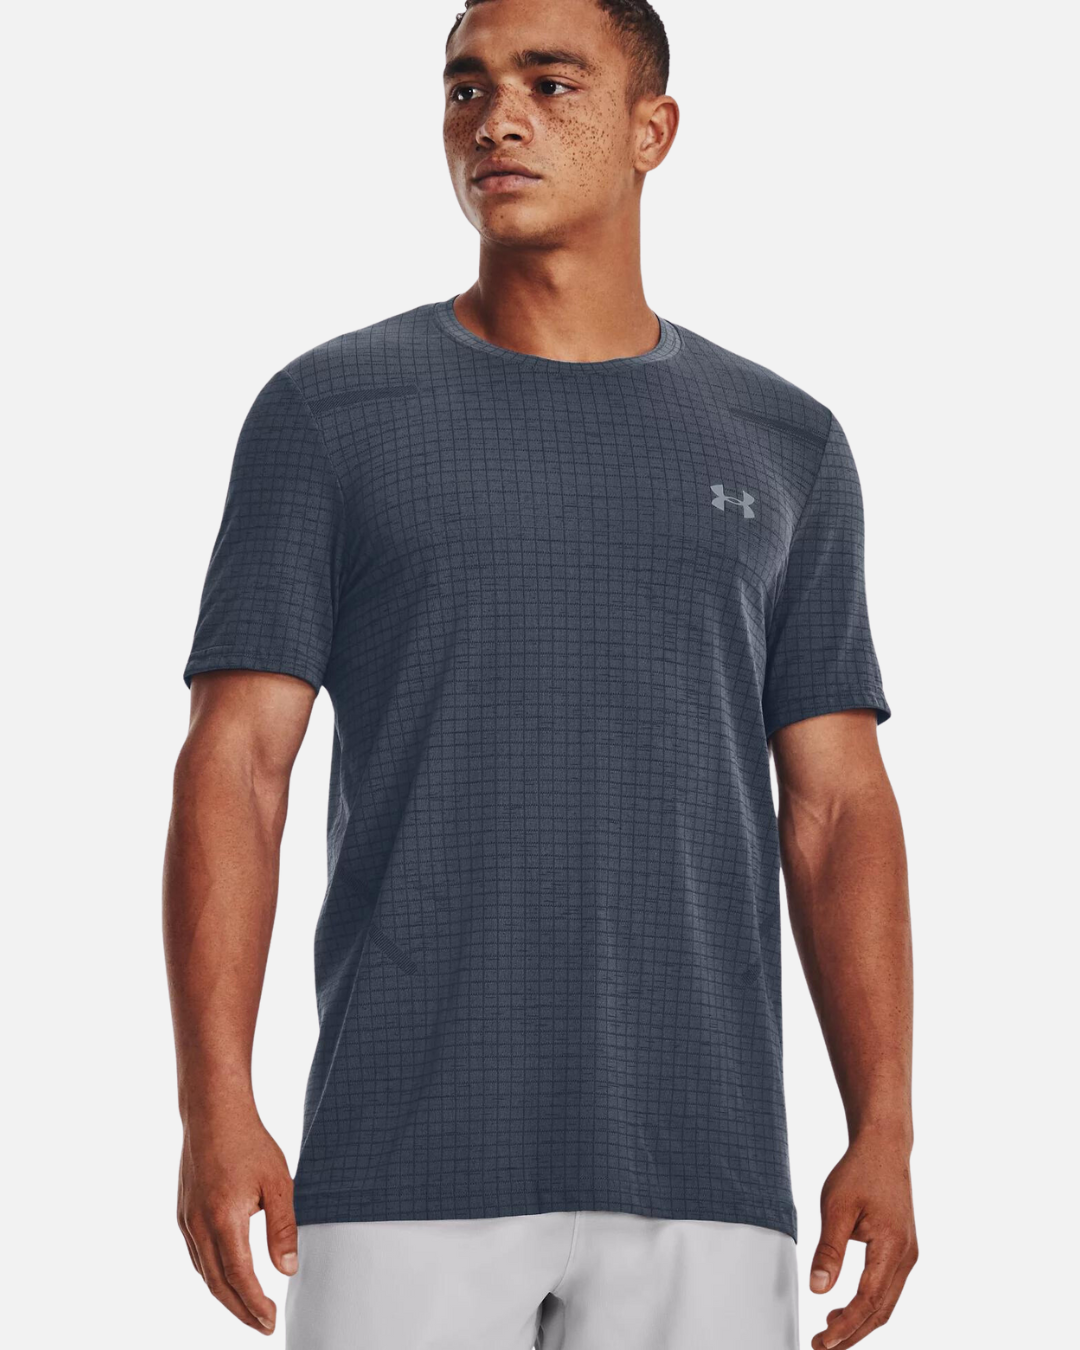 Under Armor Seamless Grid T-shirt - Gray